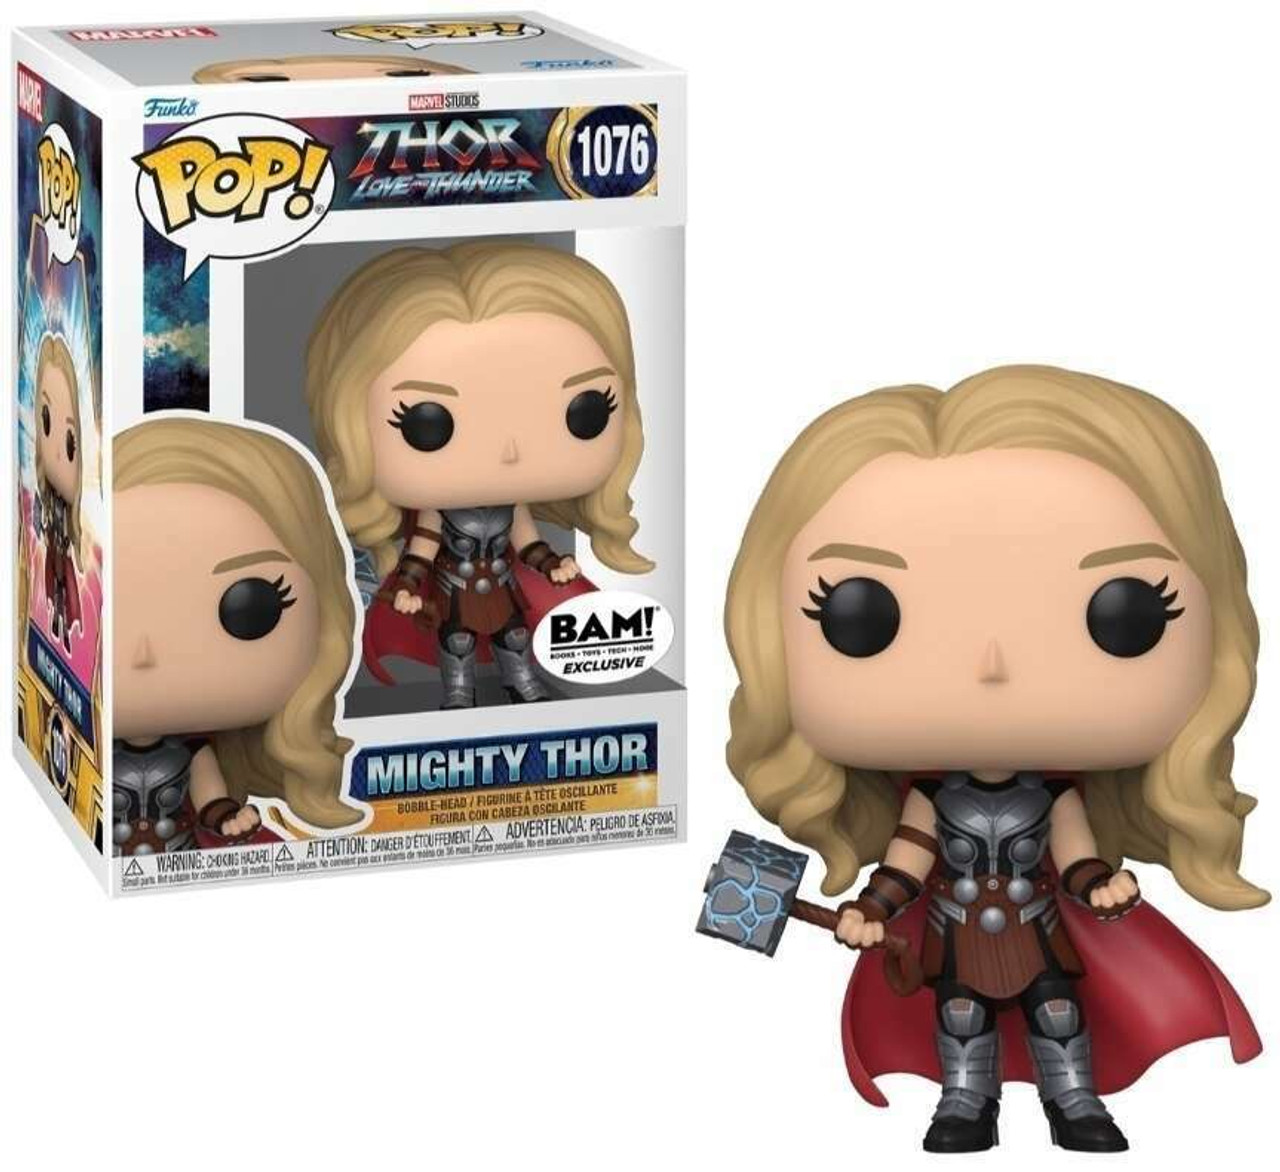 Figurine Marvel, Thor 2 - Thor, Wacky Wobbler - Funko